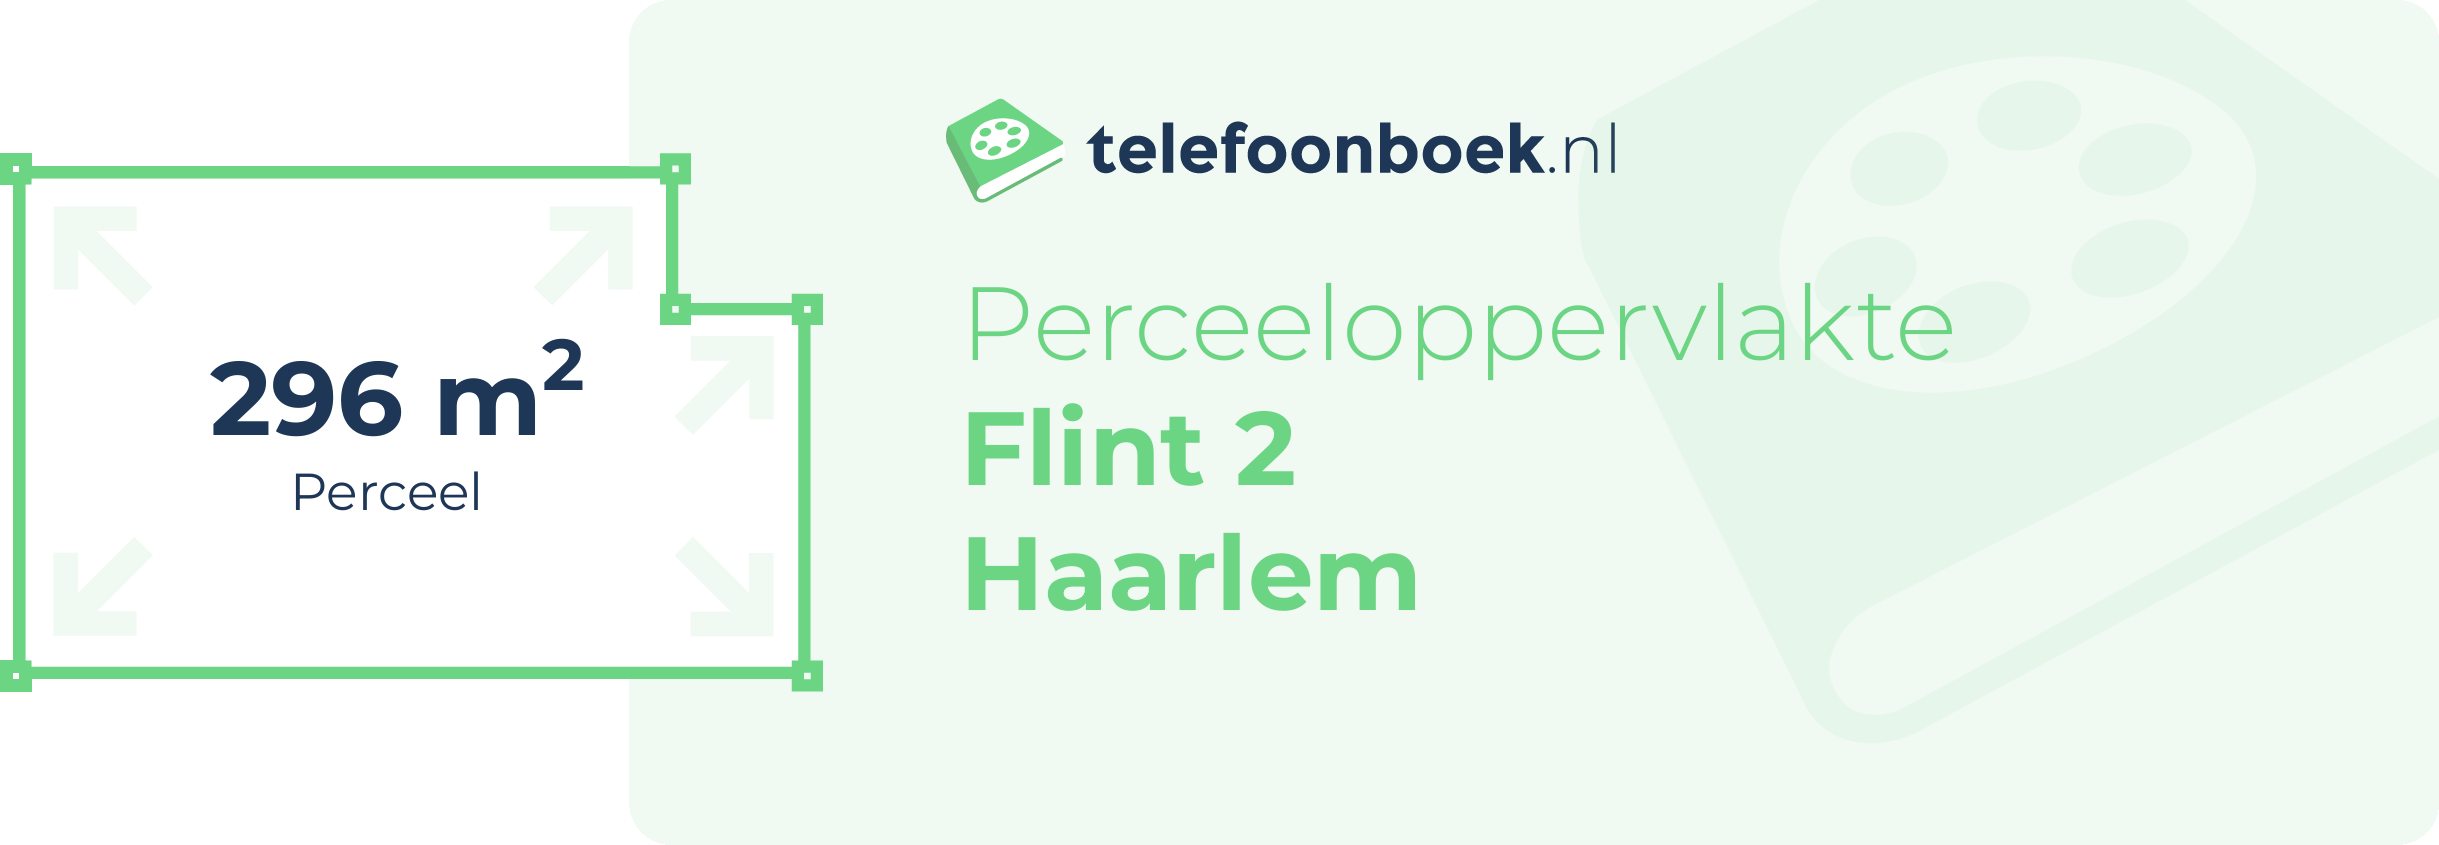 Perceeloppervlakte Flint 2 Haarlem